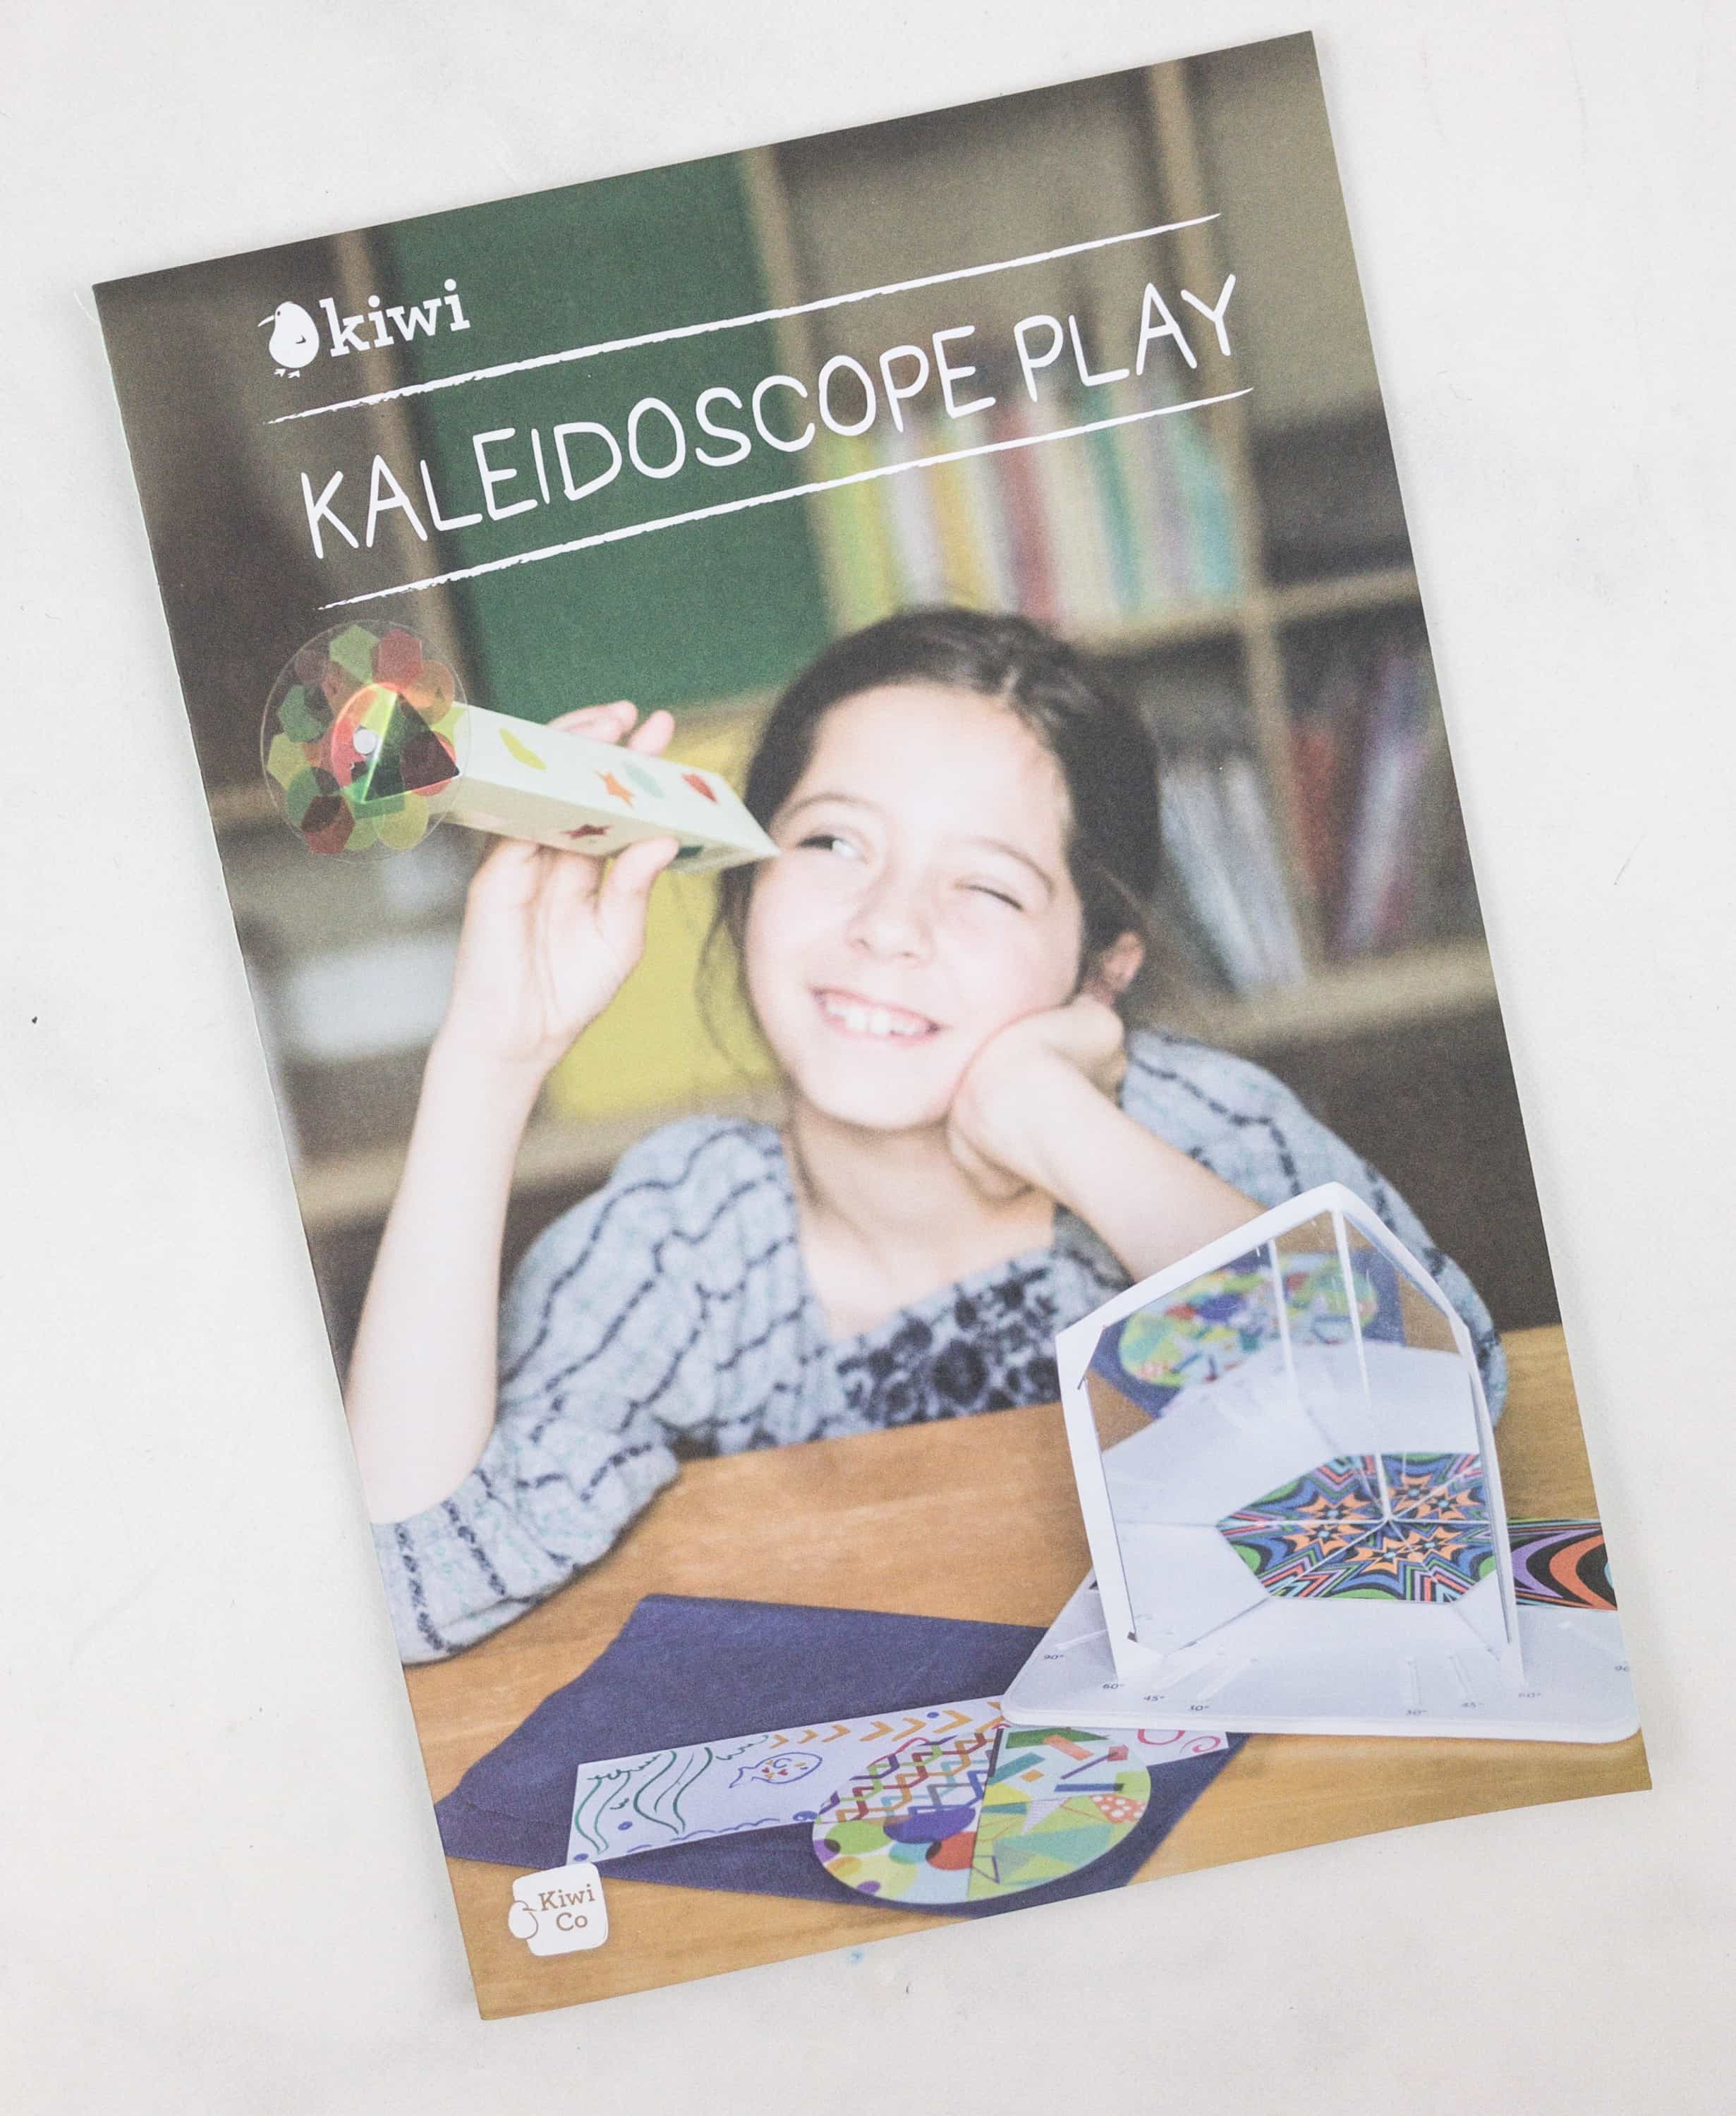 Kiwi Co Crate Kaleidoscope Puzzles Ages 5 & Up 